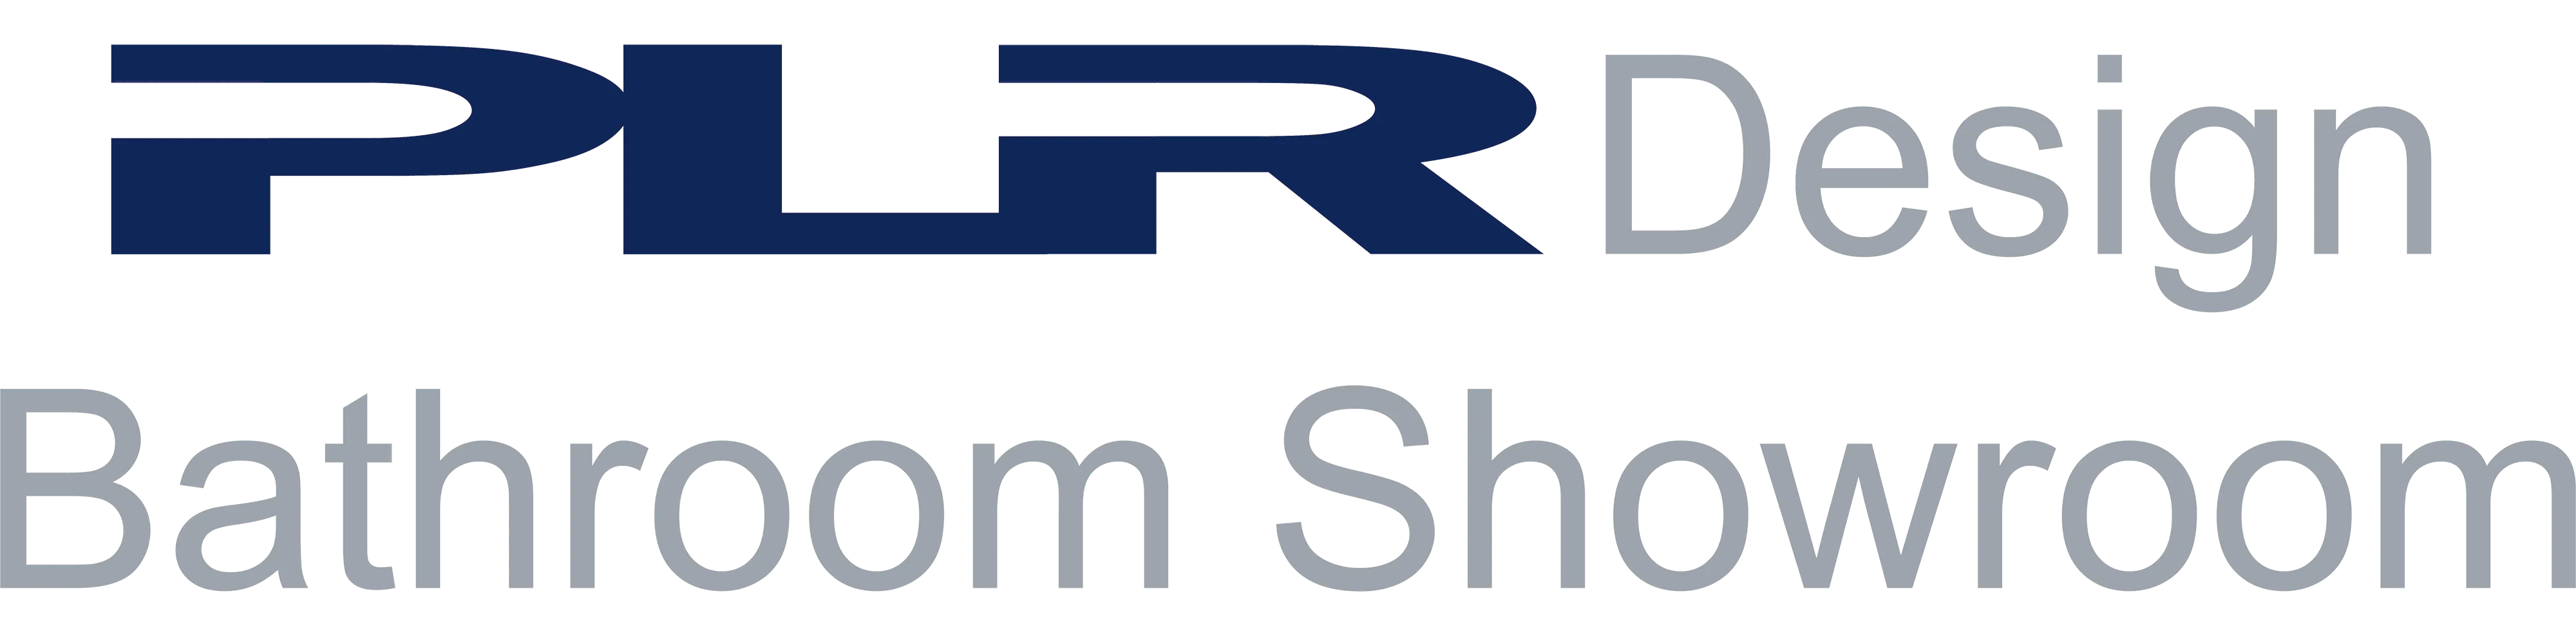 The logo for plr design bathroom showroom.